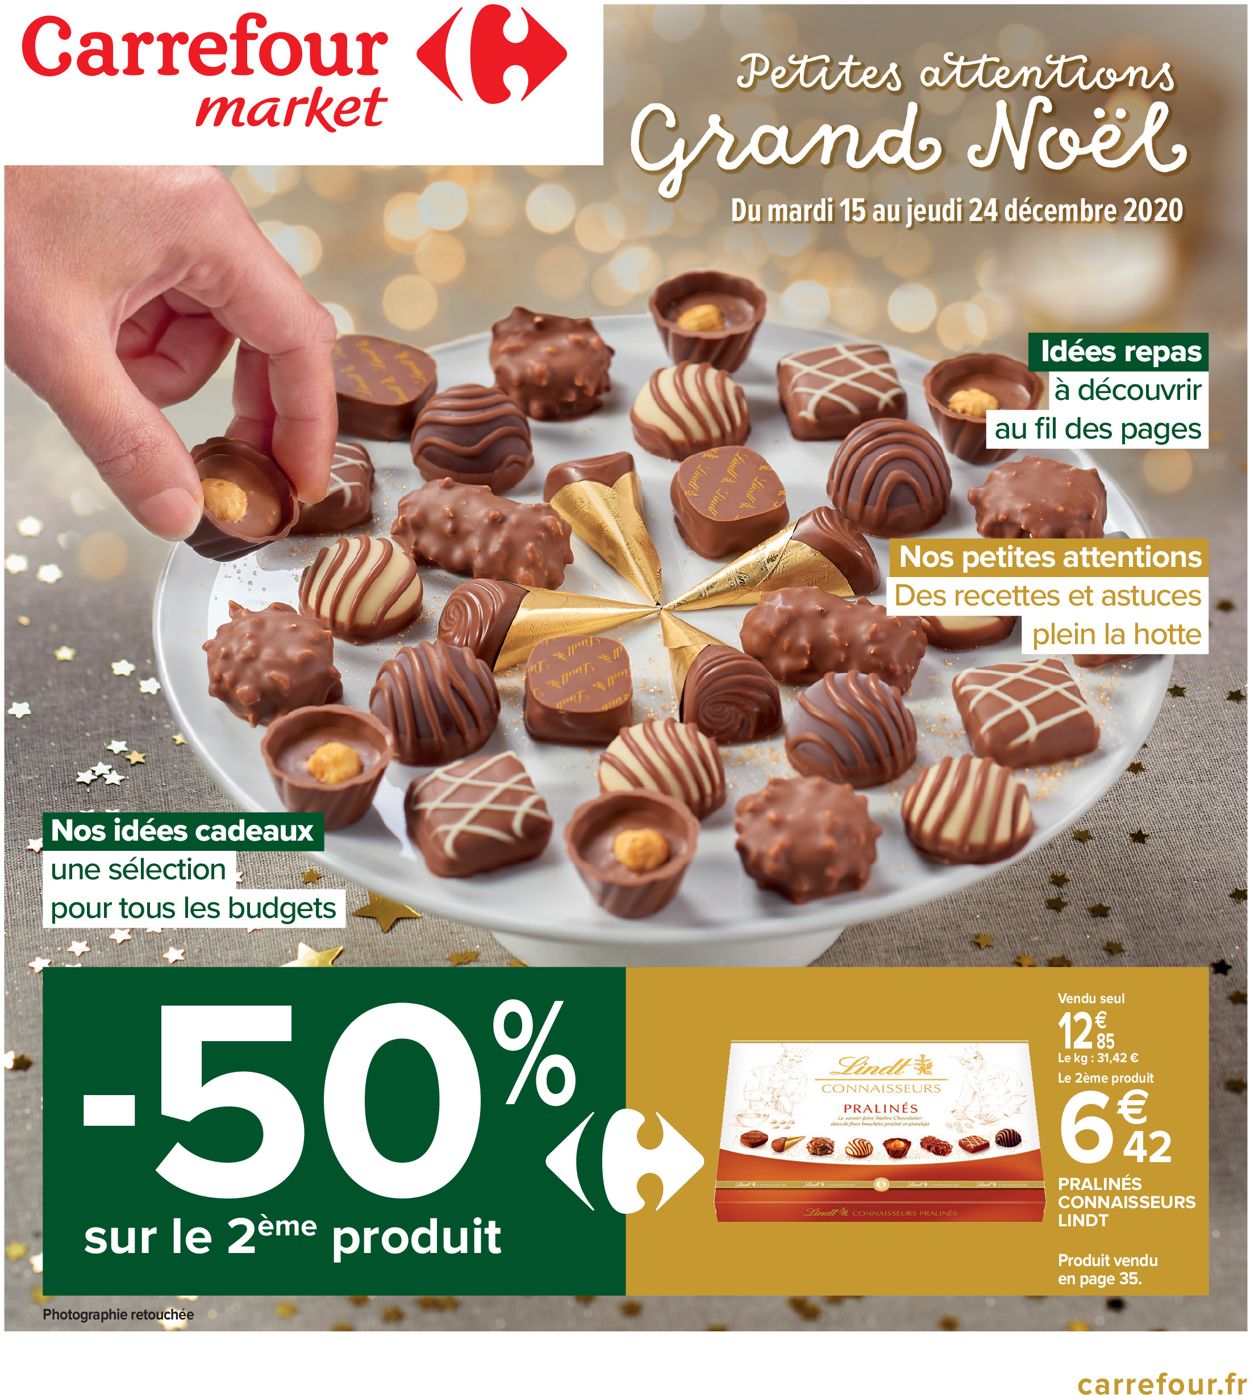 Carrefour Grand Noel 2020 Catalogue - 15.12-24.12.2020